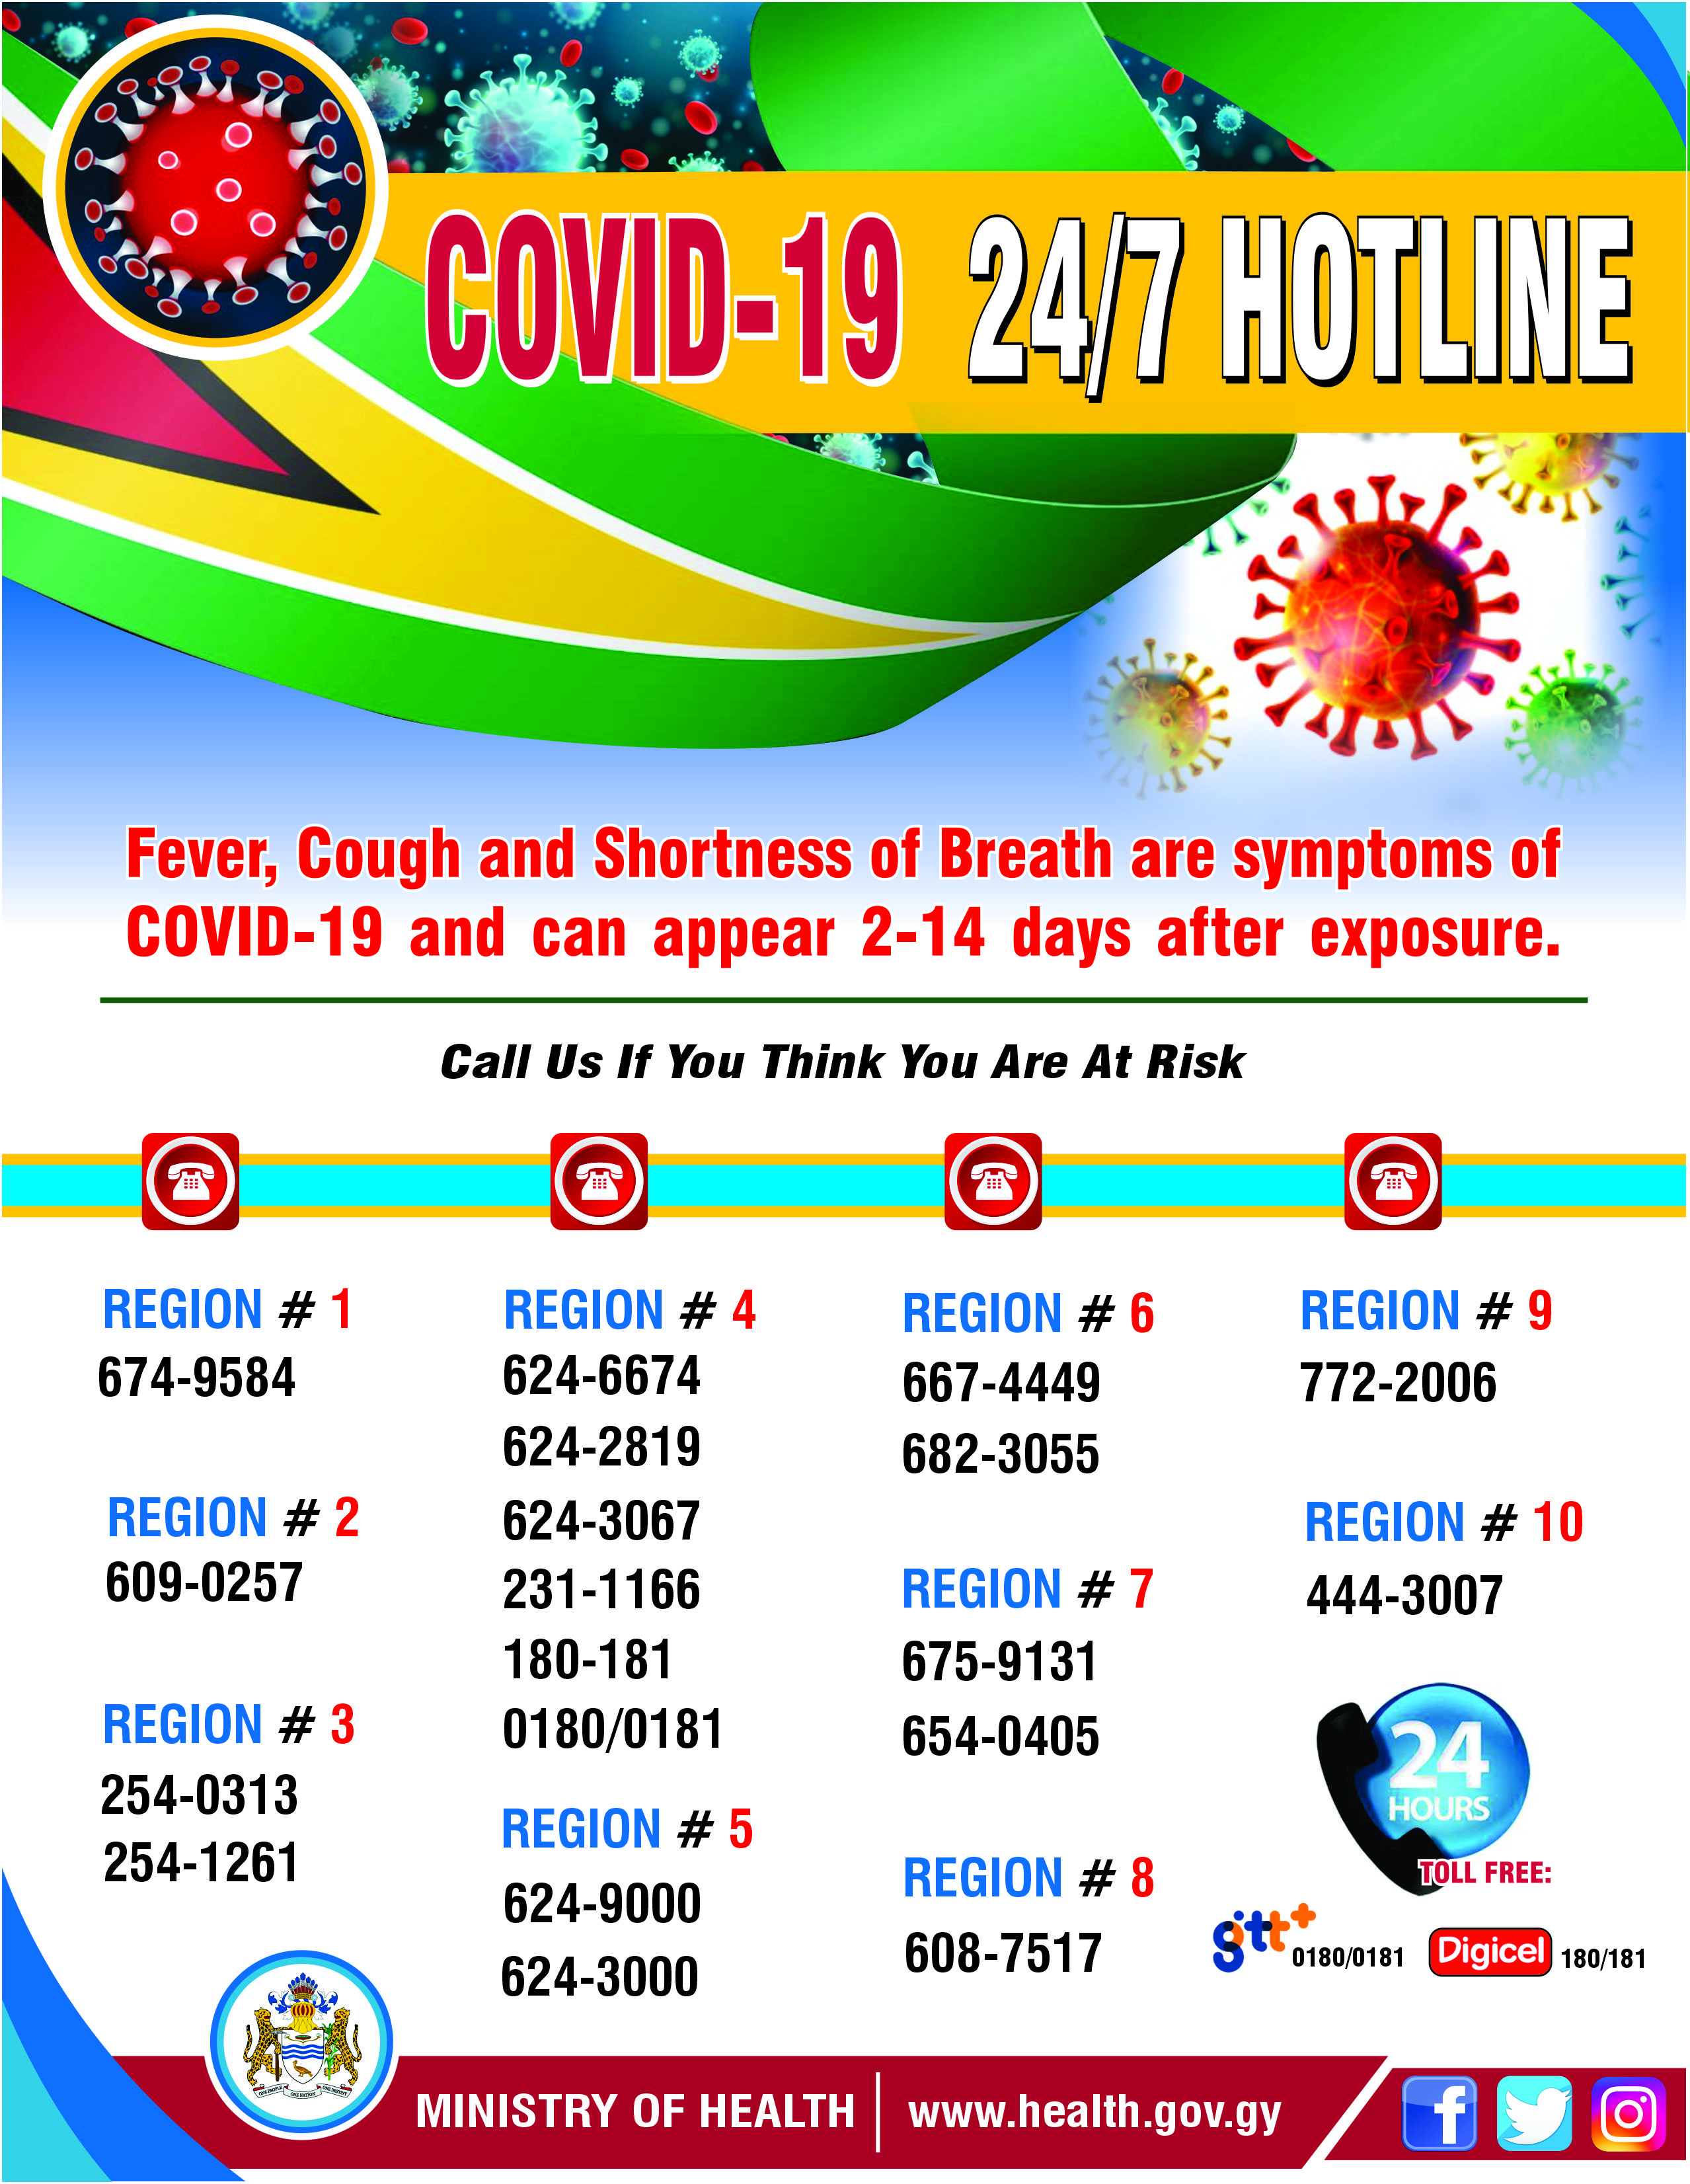 COVID-19 Hotlines